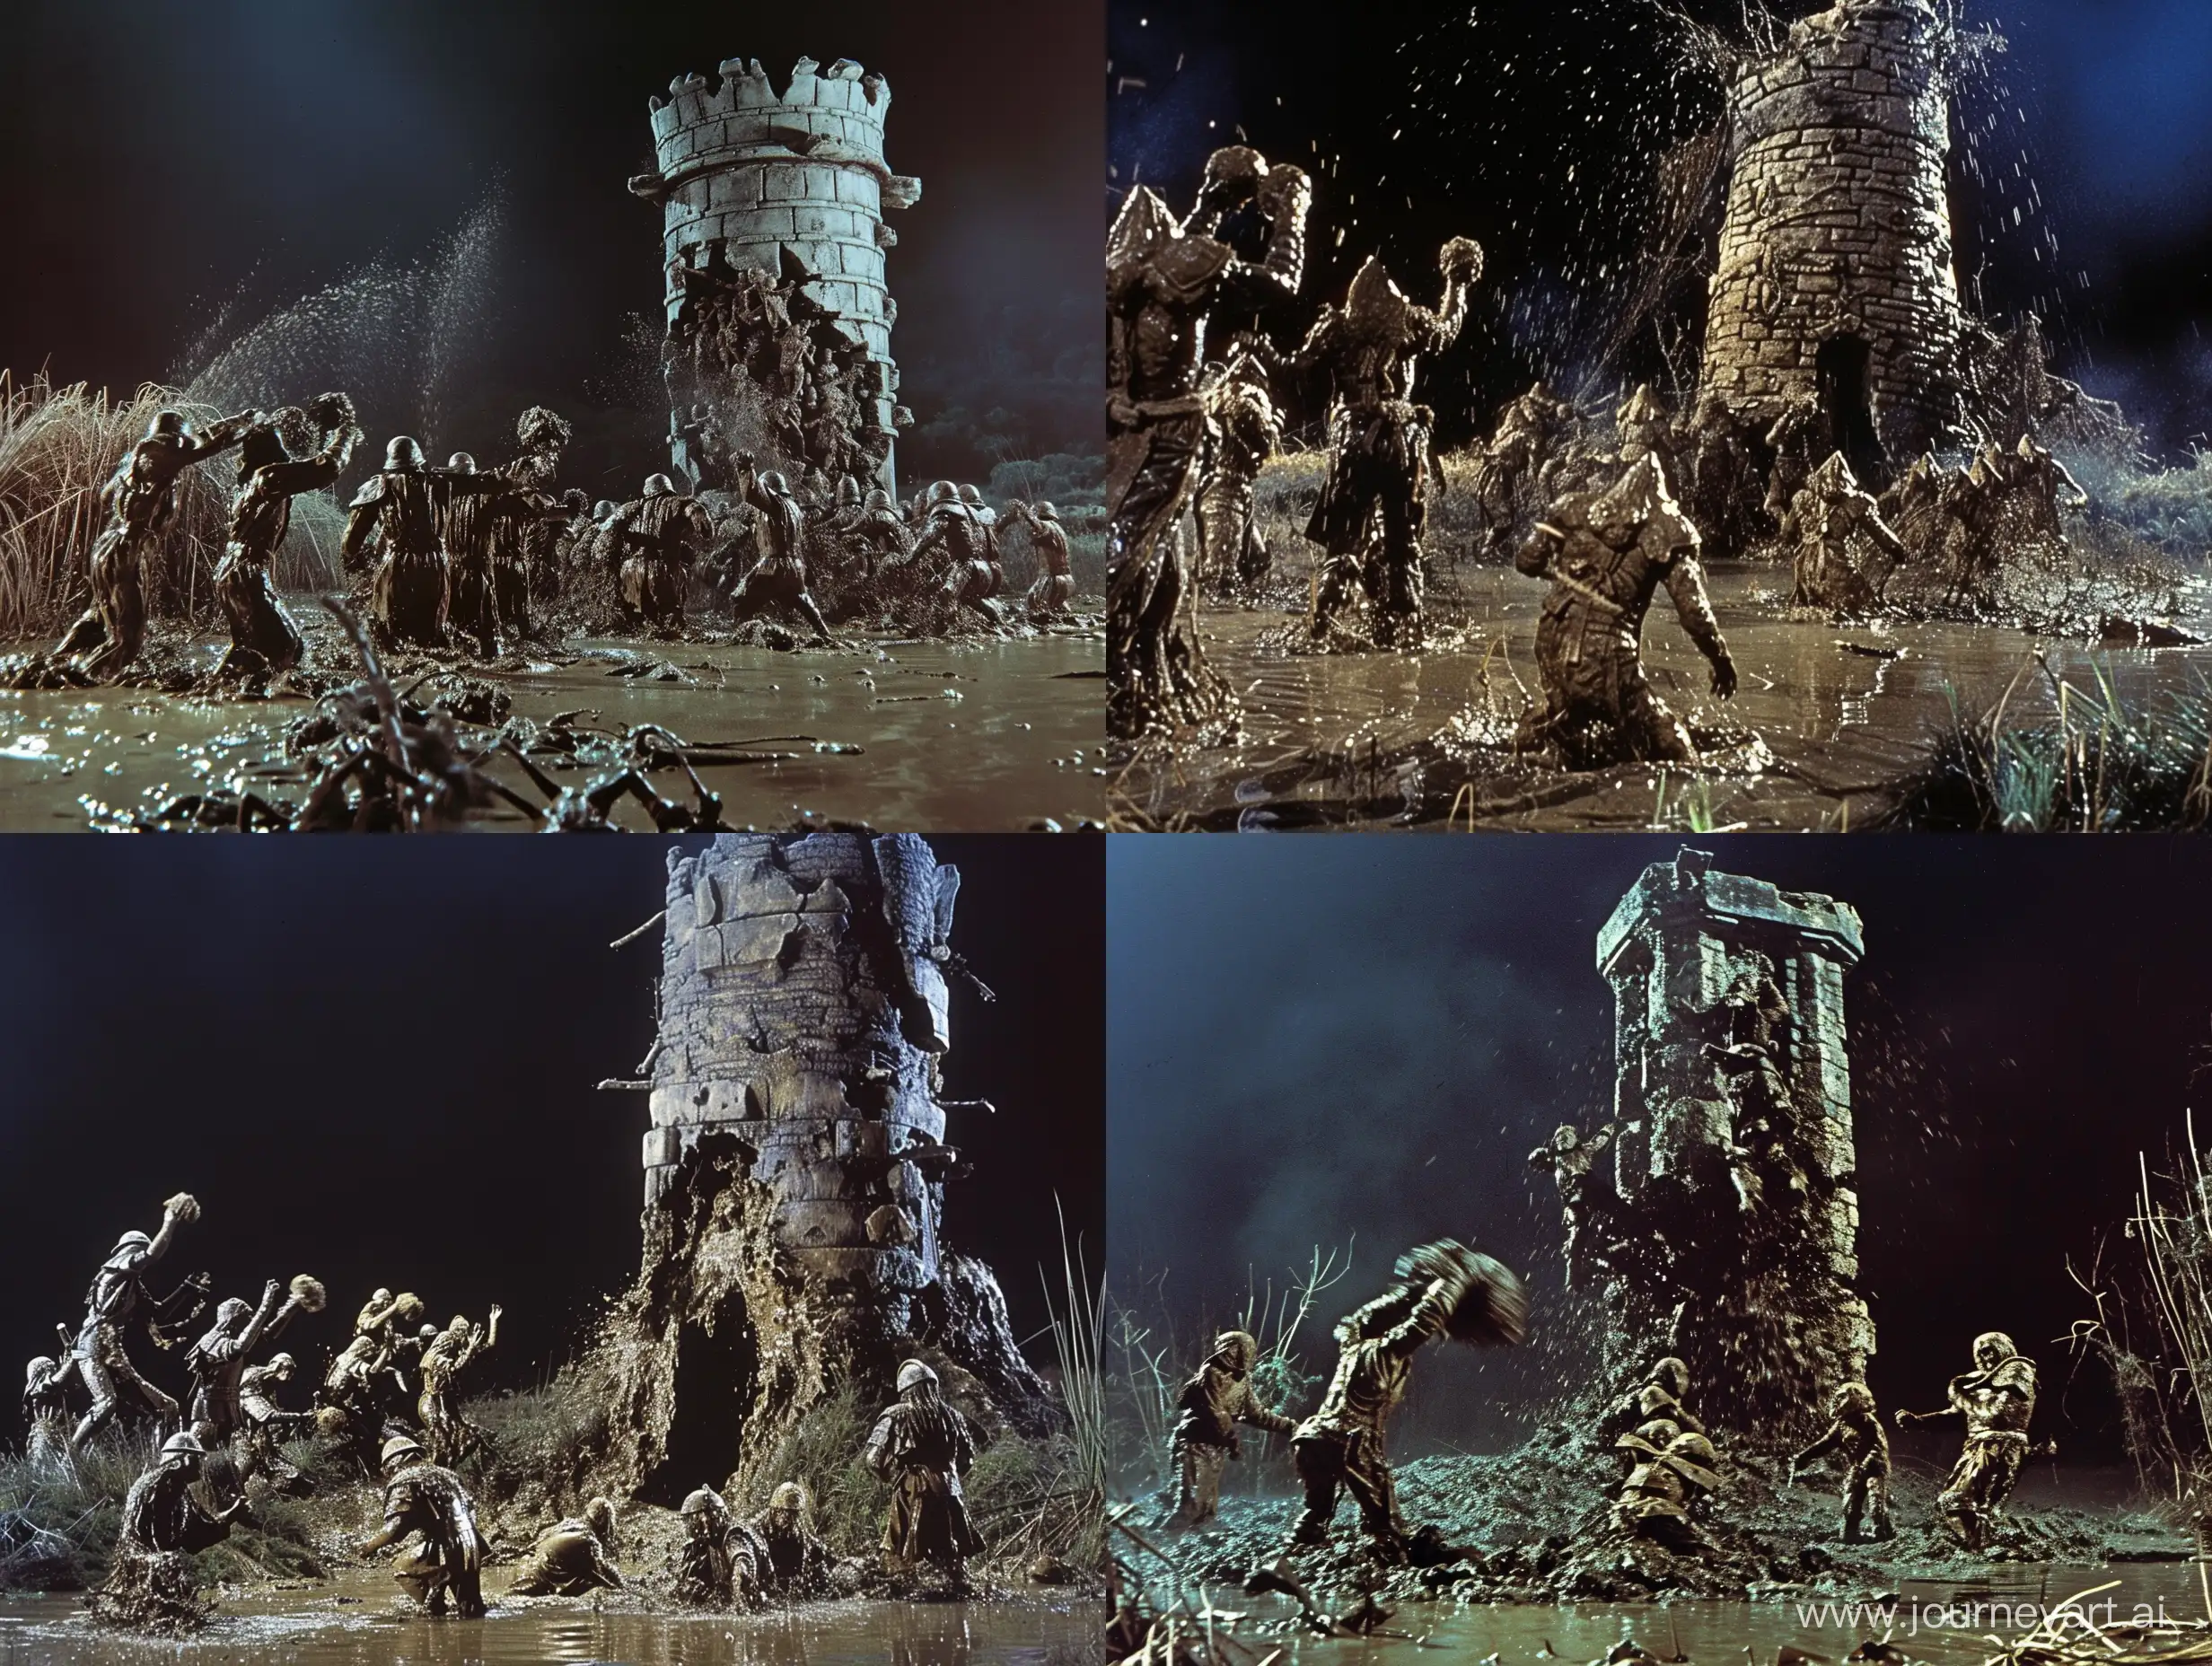 Dark-Fantasy-Scene-Mud-Men-Ambush-Warriors-in-Ancient-Tower